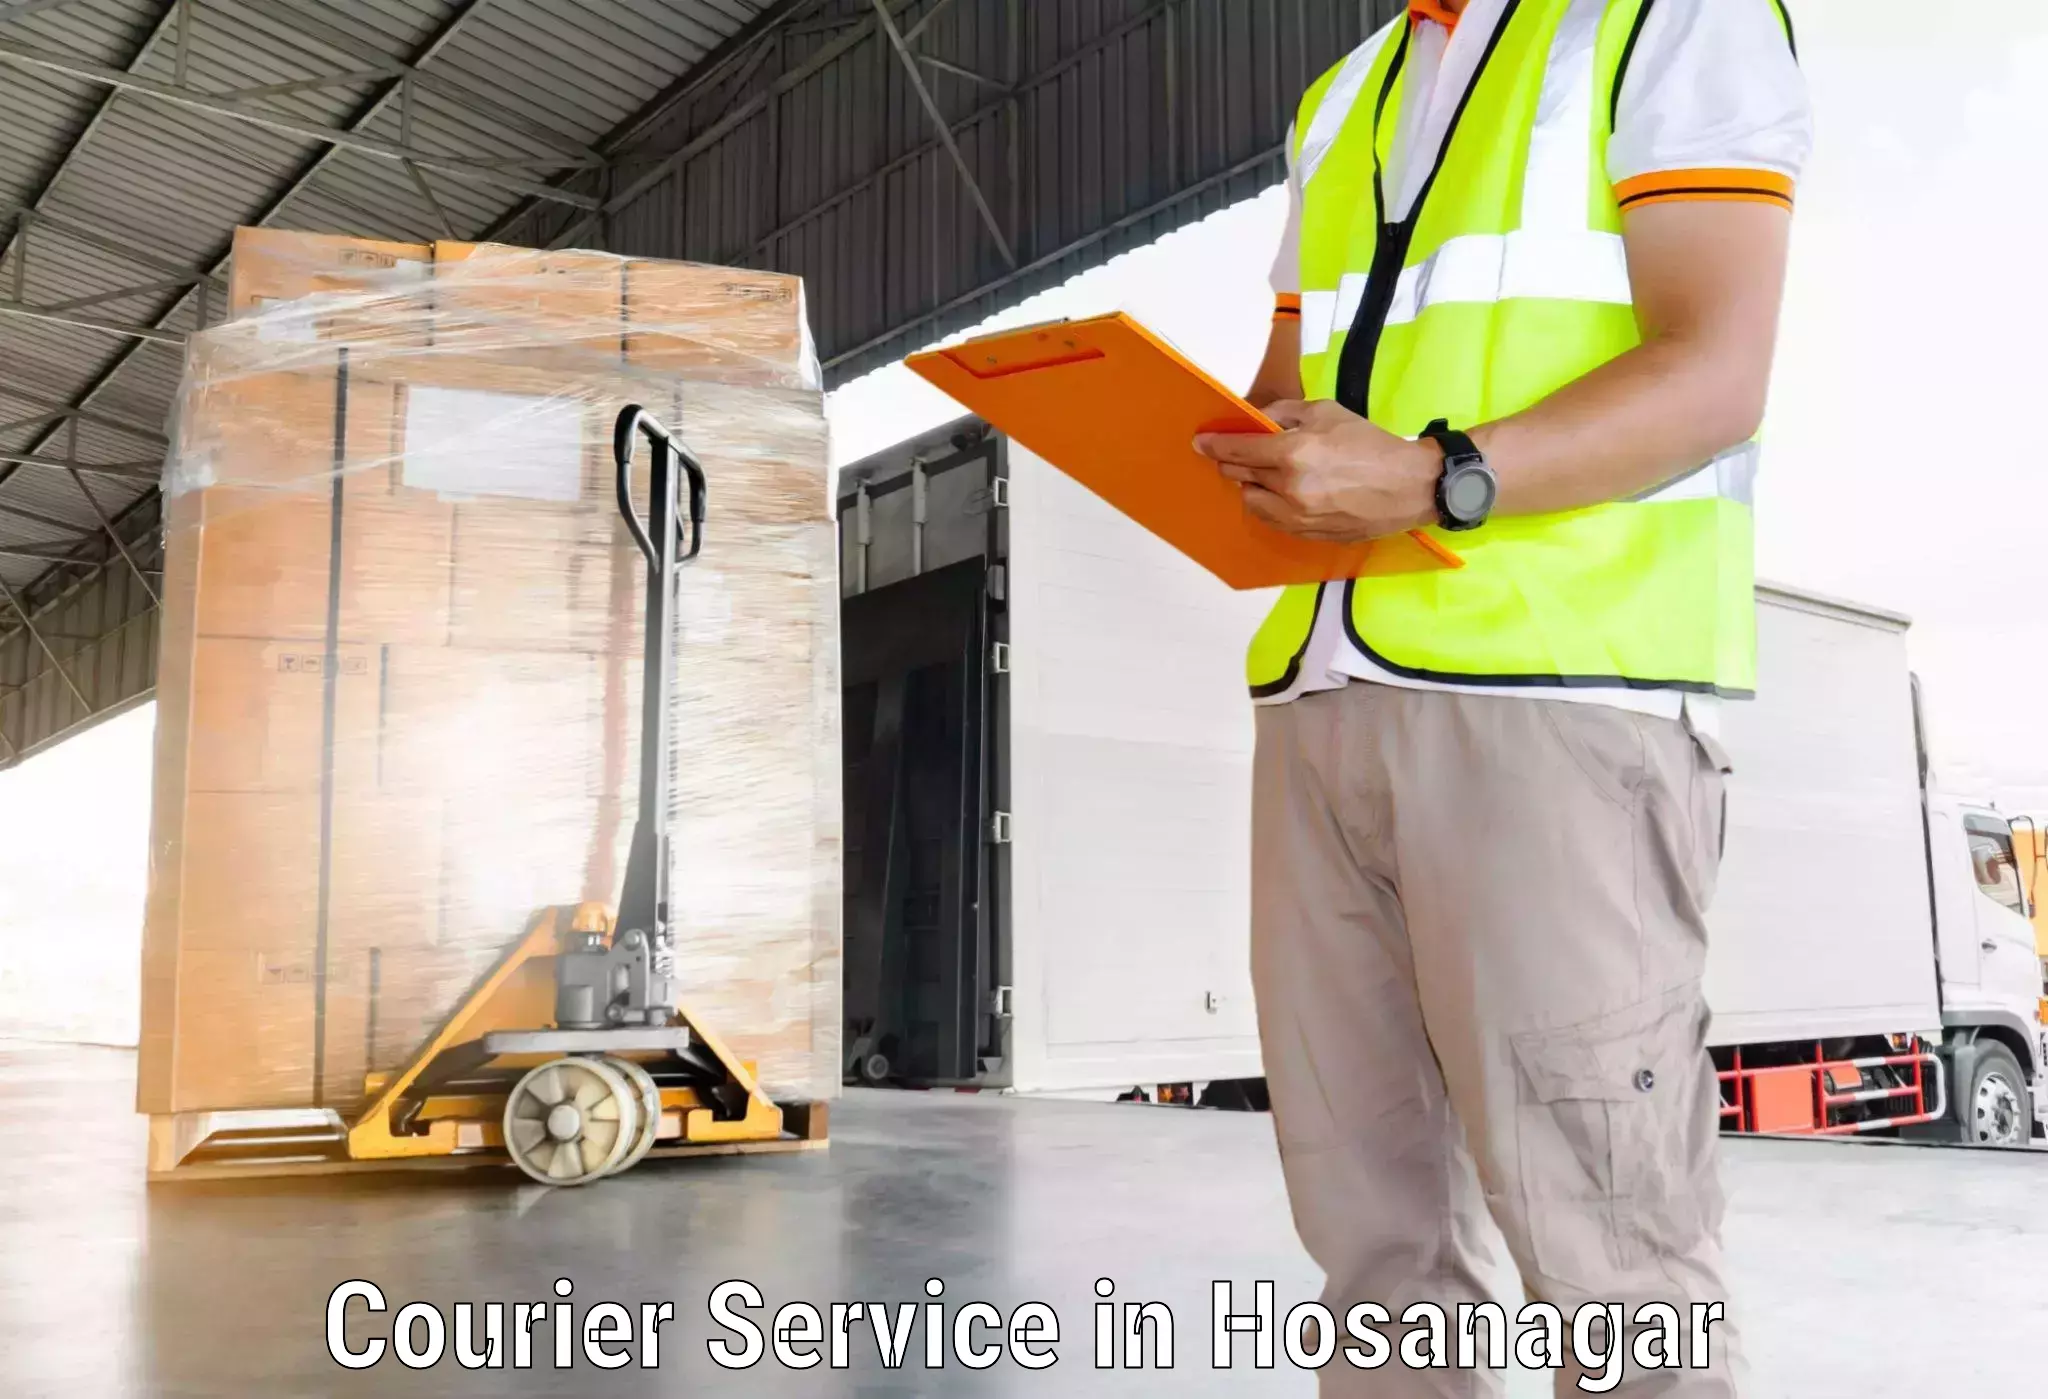 Fast parcel dispatch in Hosanagar